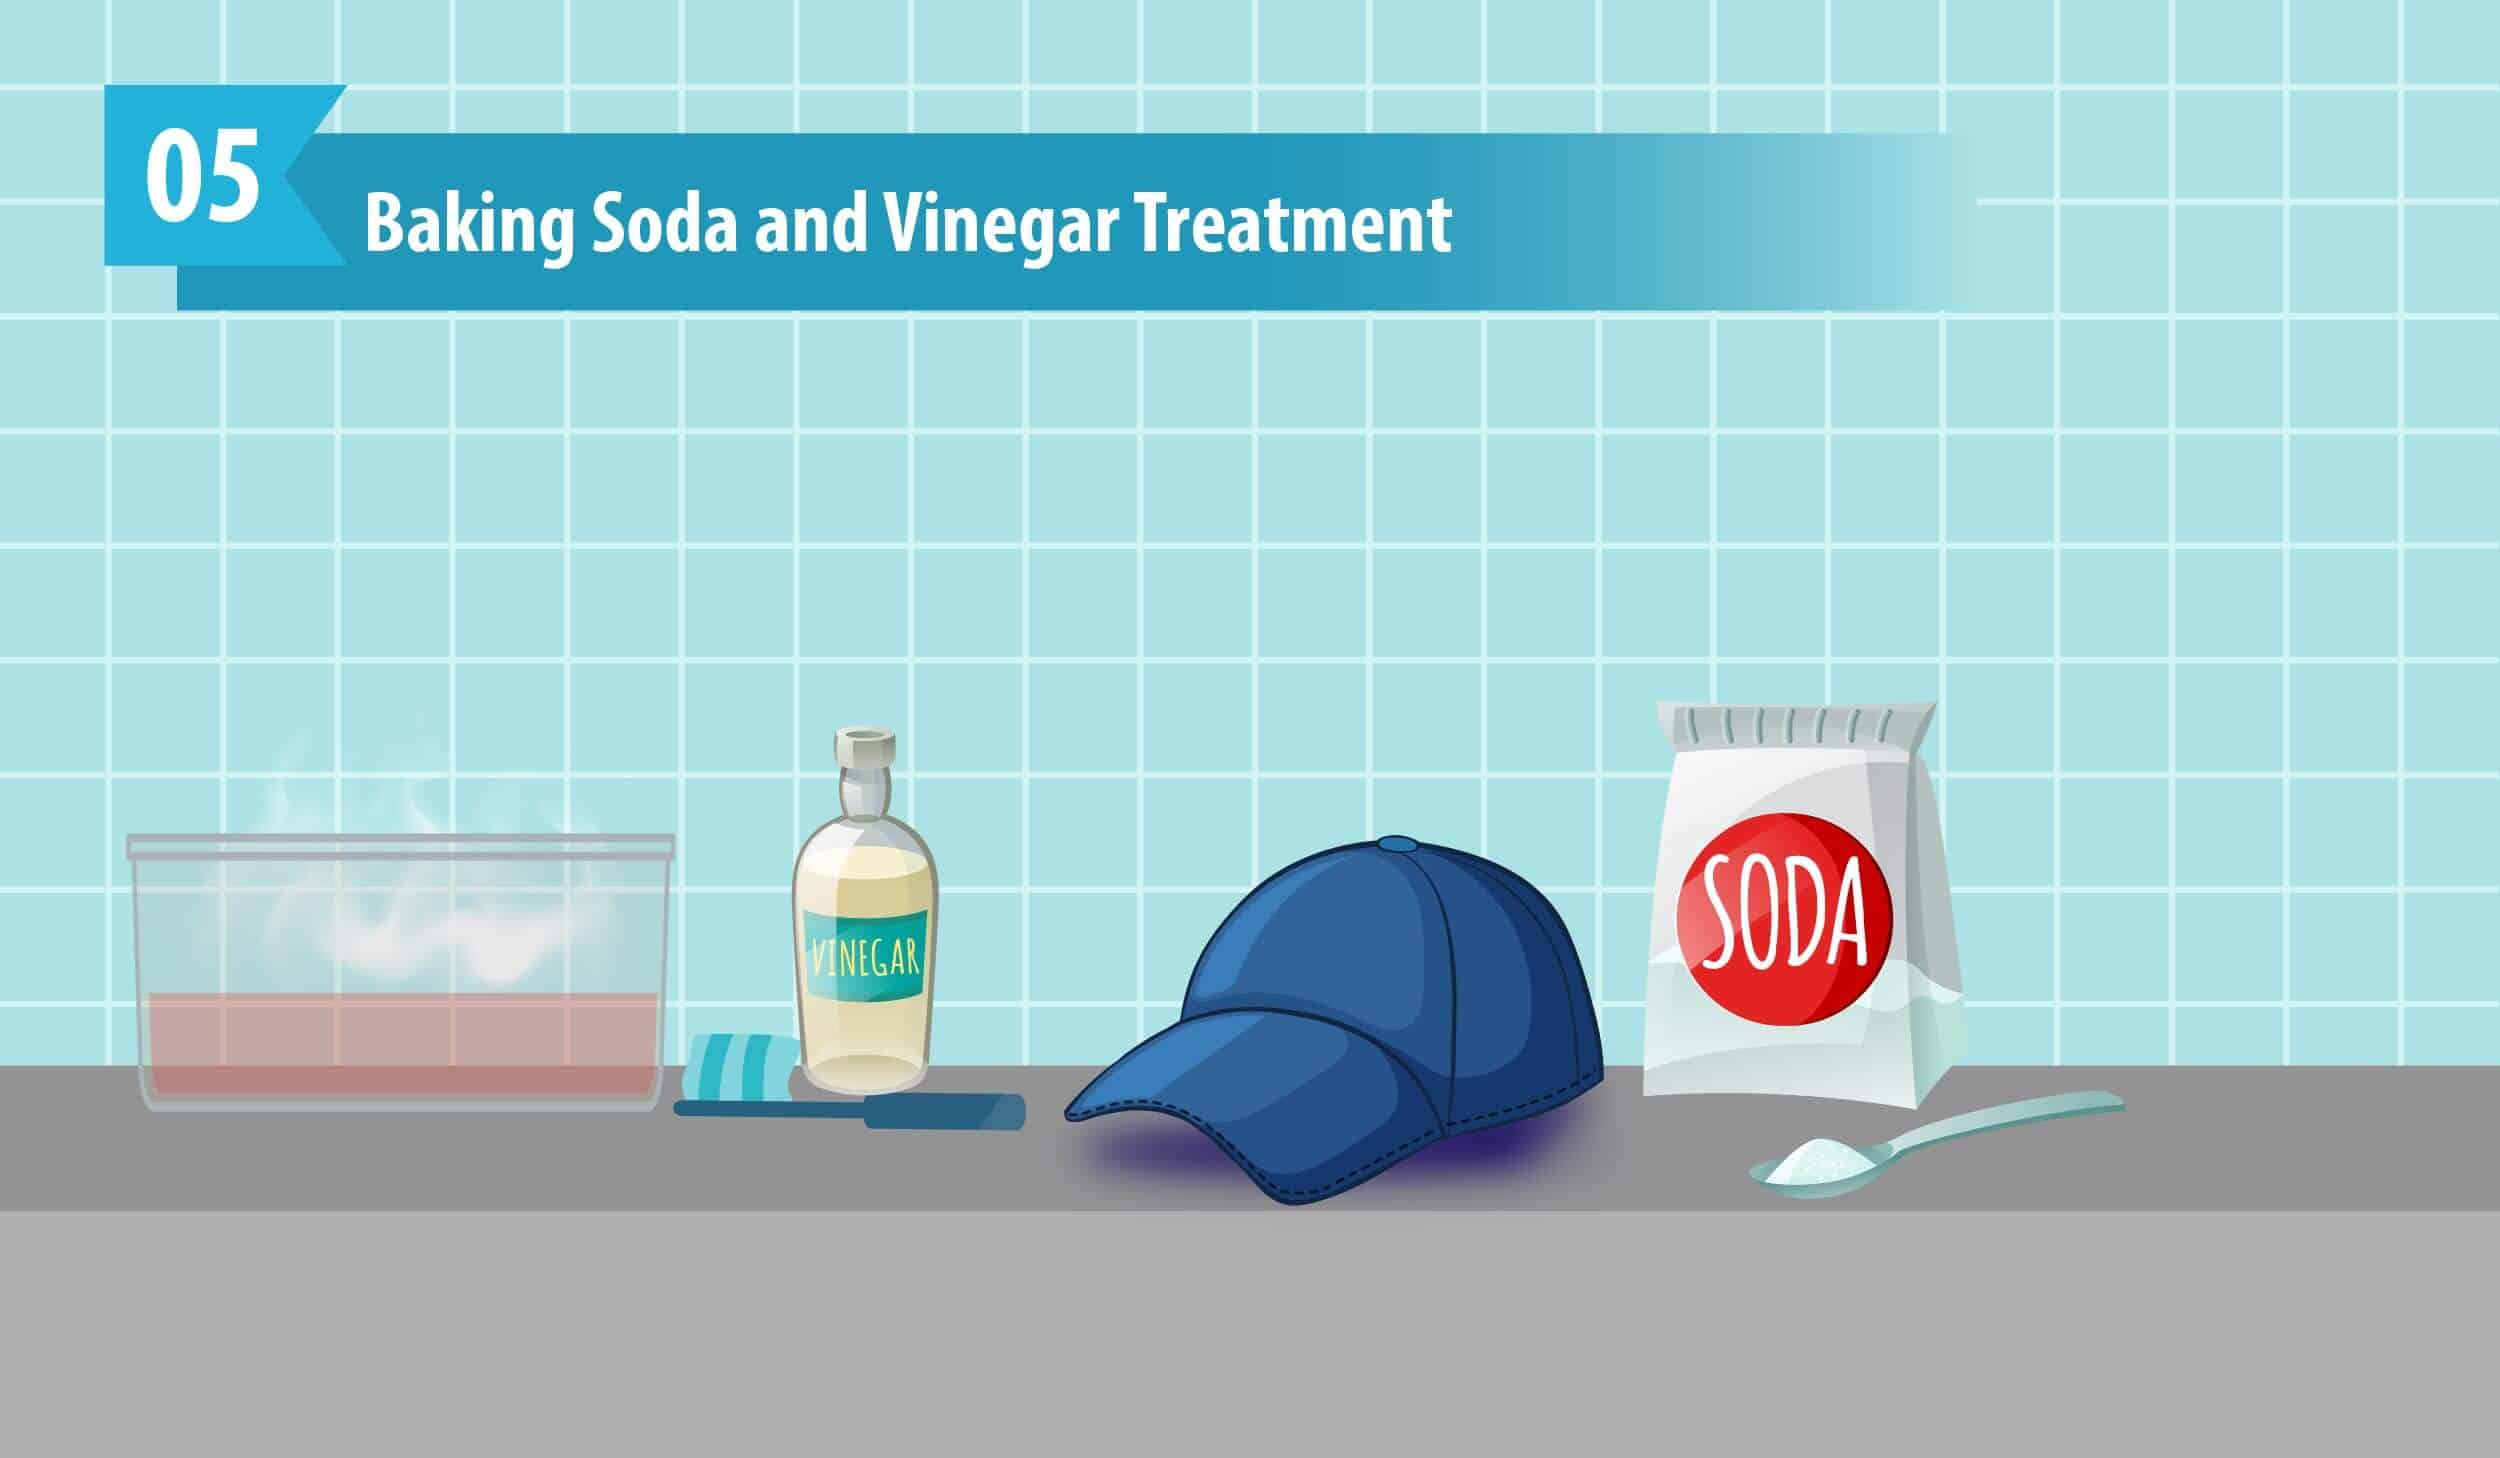 Baking Soda and Vinegar Treatment